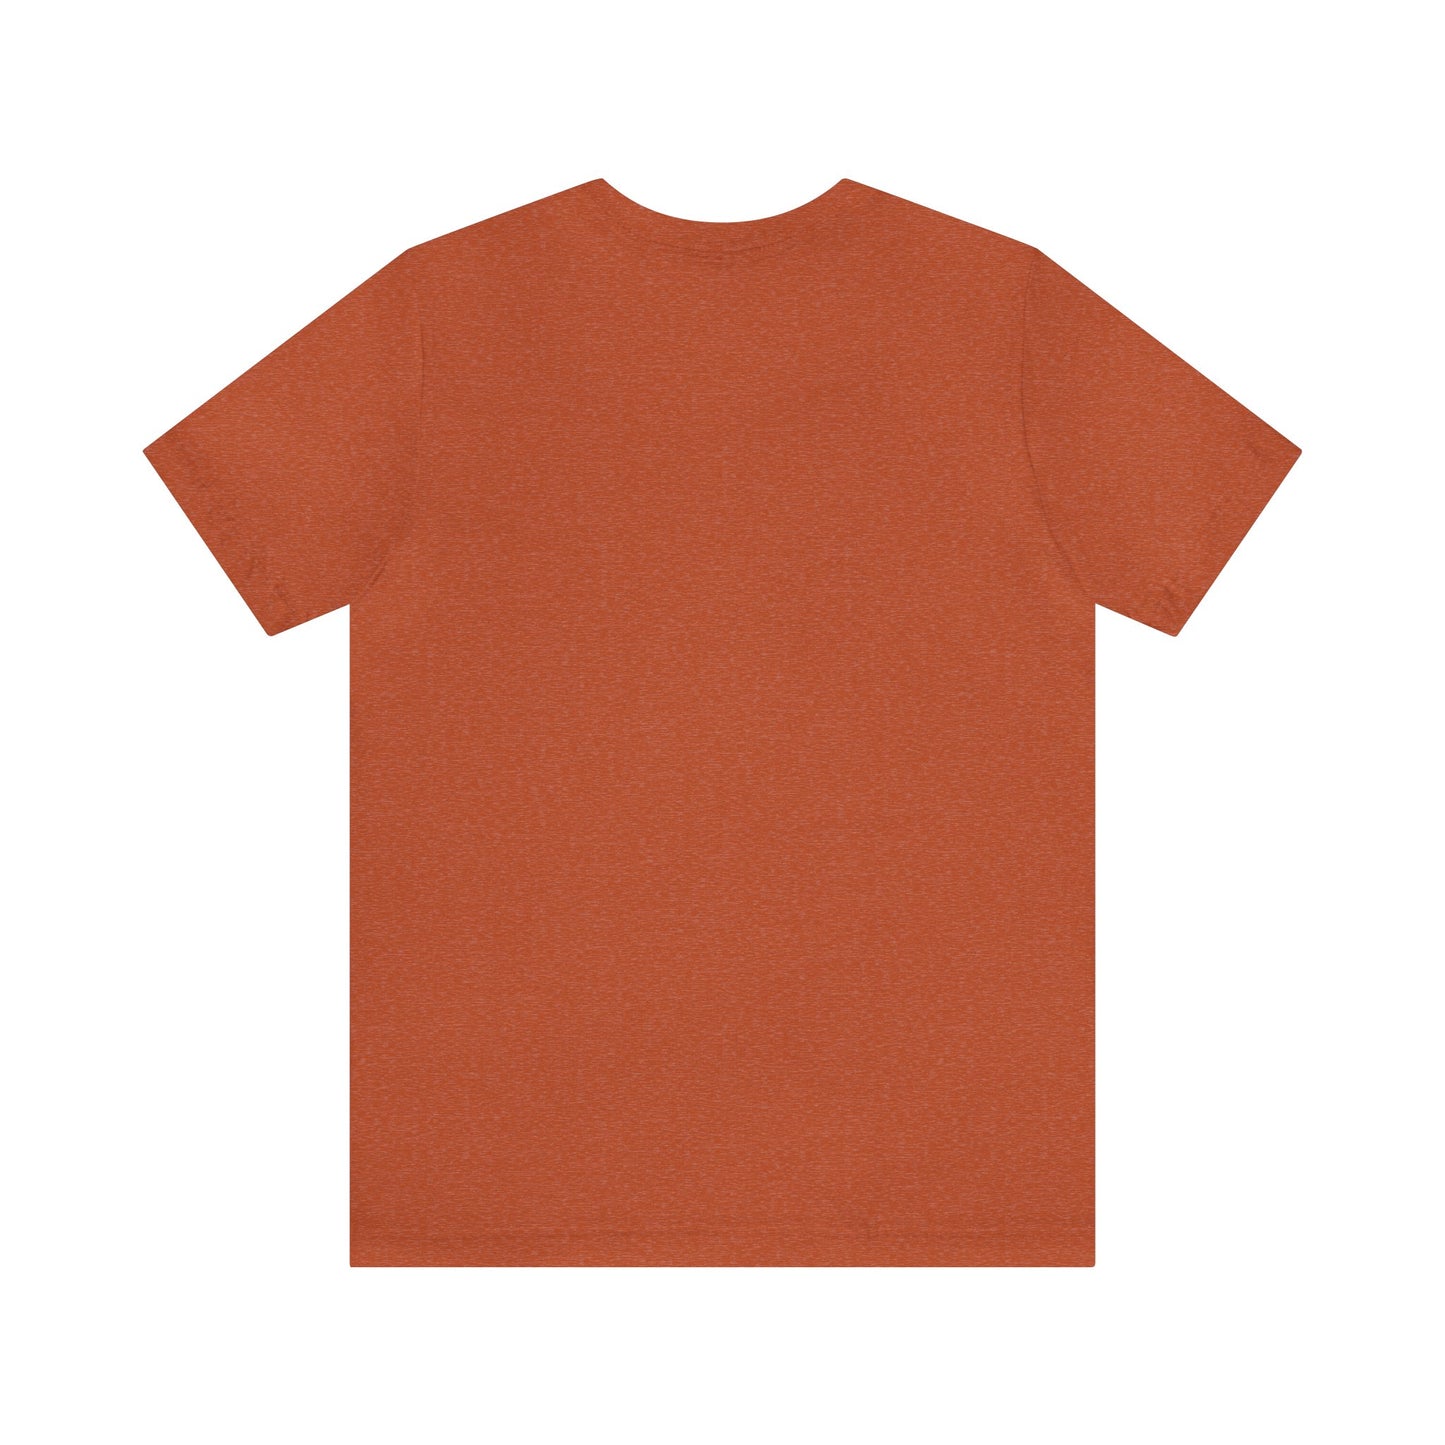 2024 Senior - Jersey Short Sleeve T-Shirt